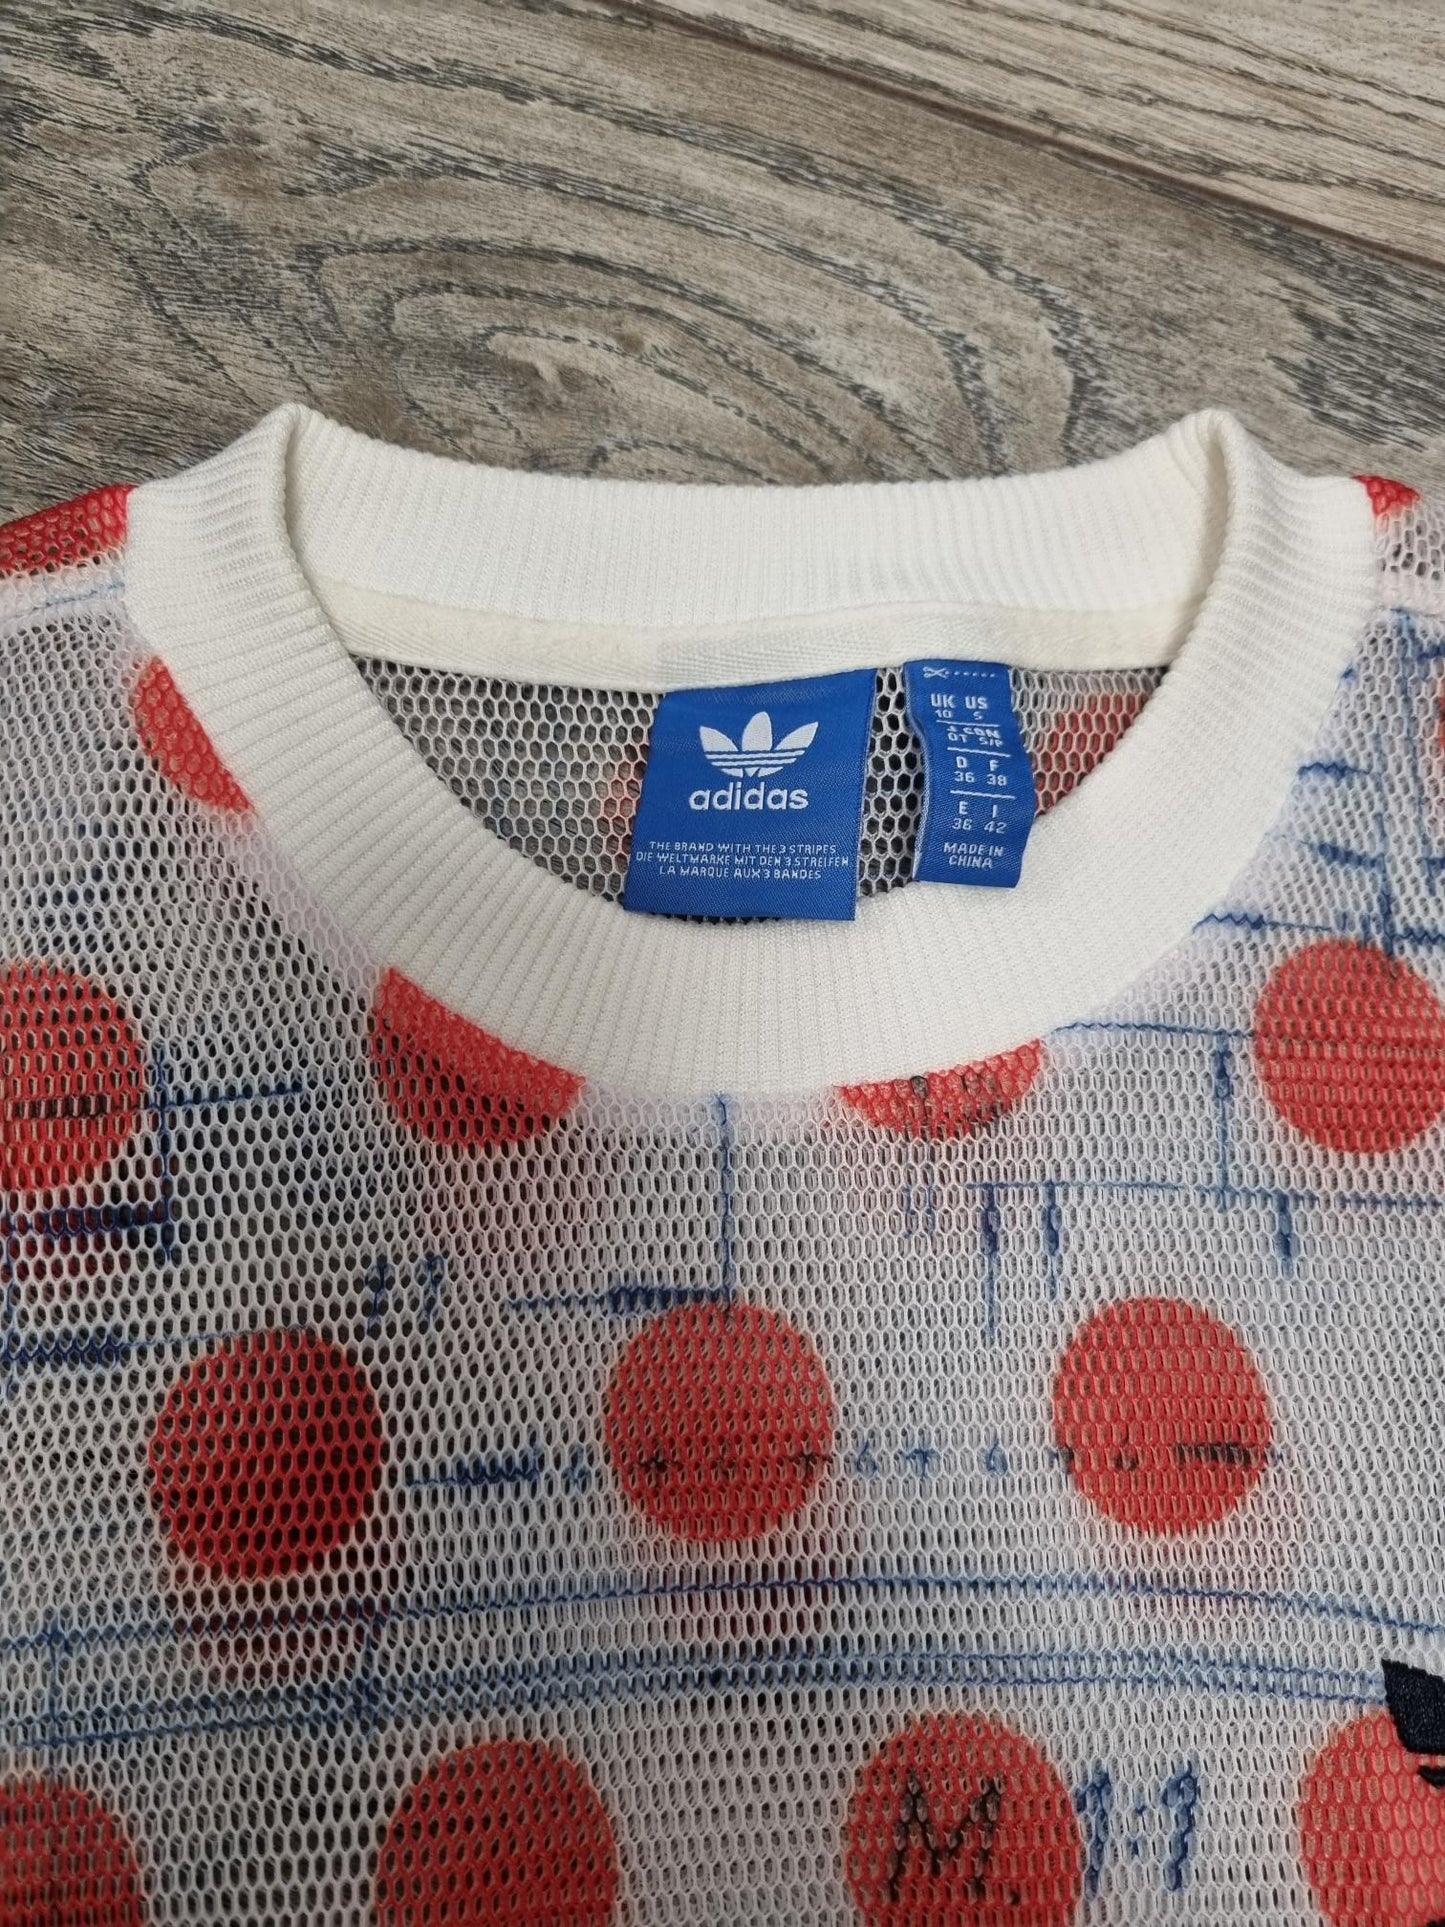 Adidas Originals Osaka Polka Dot Mesh Sweatshirt Size 10